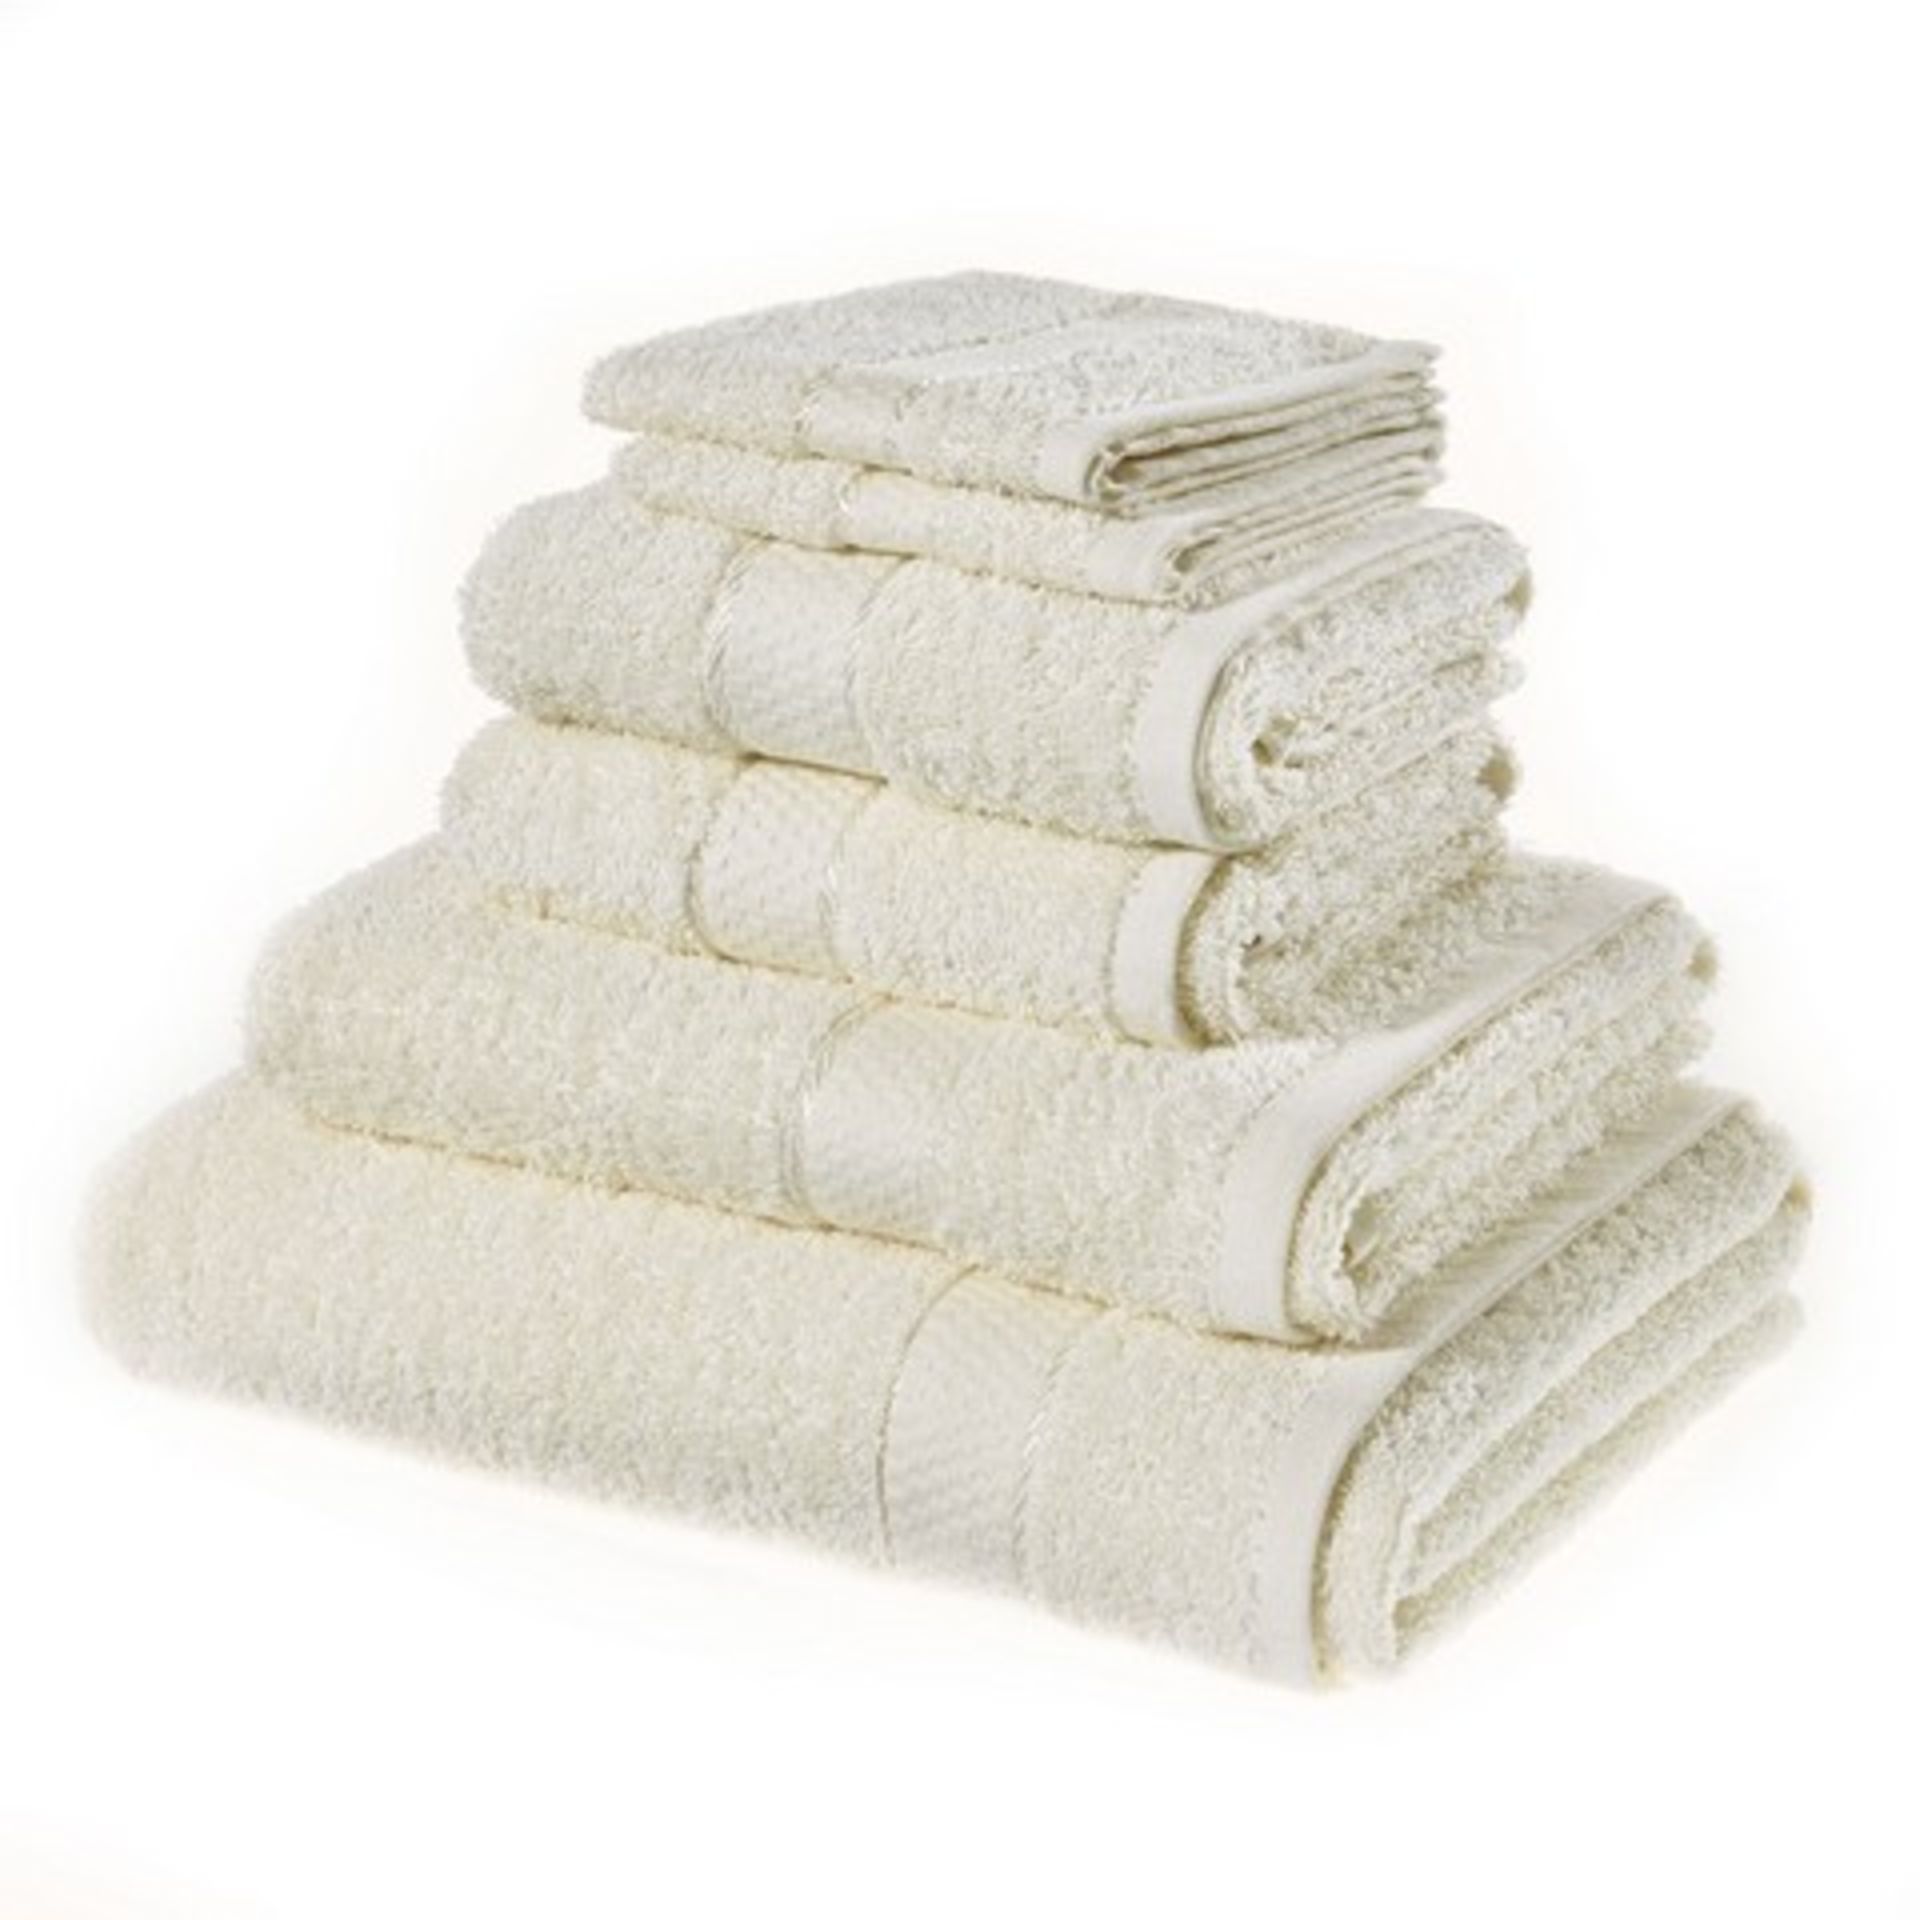 + VAT Brand New Cream 6 Piece Towel Bale Set With 2 Face Towels - 2 Hand Towels - 1 Bath Sheet - 1